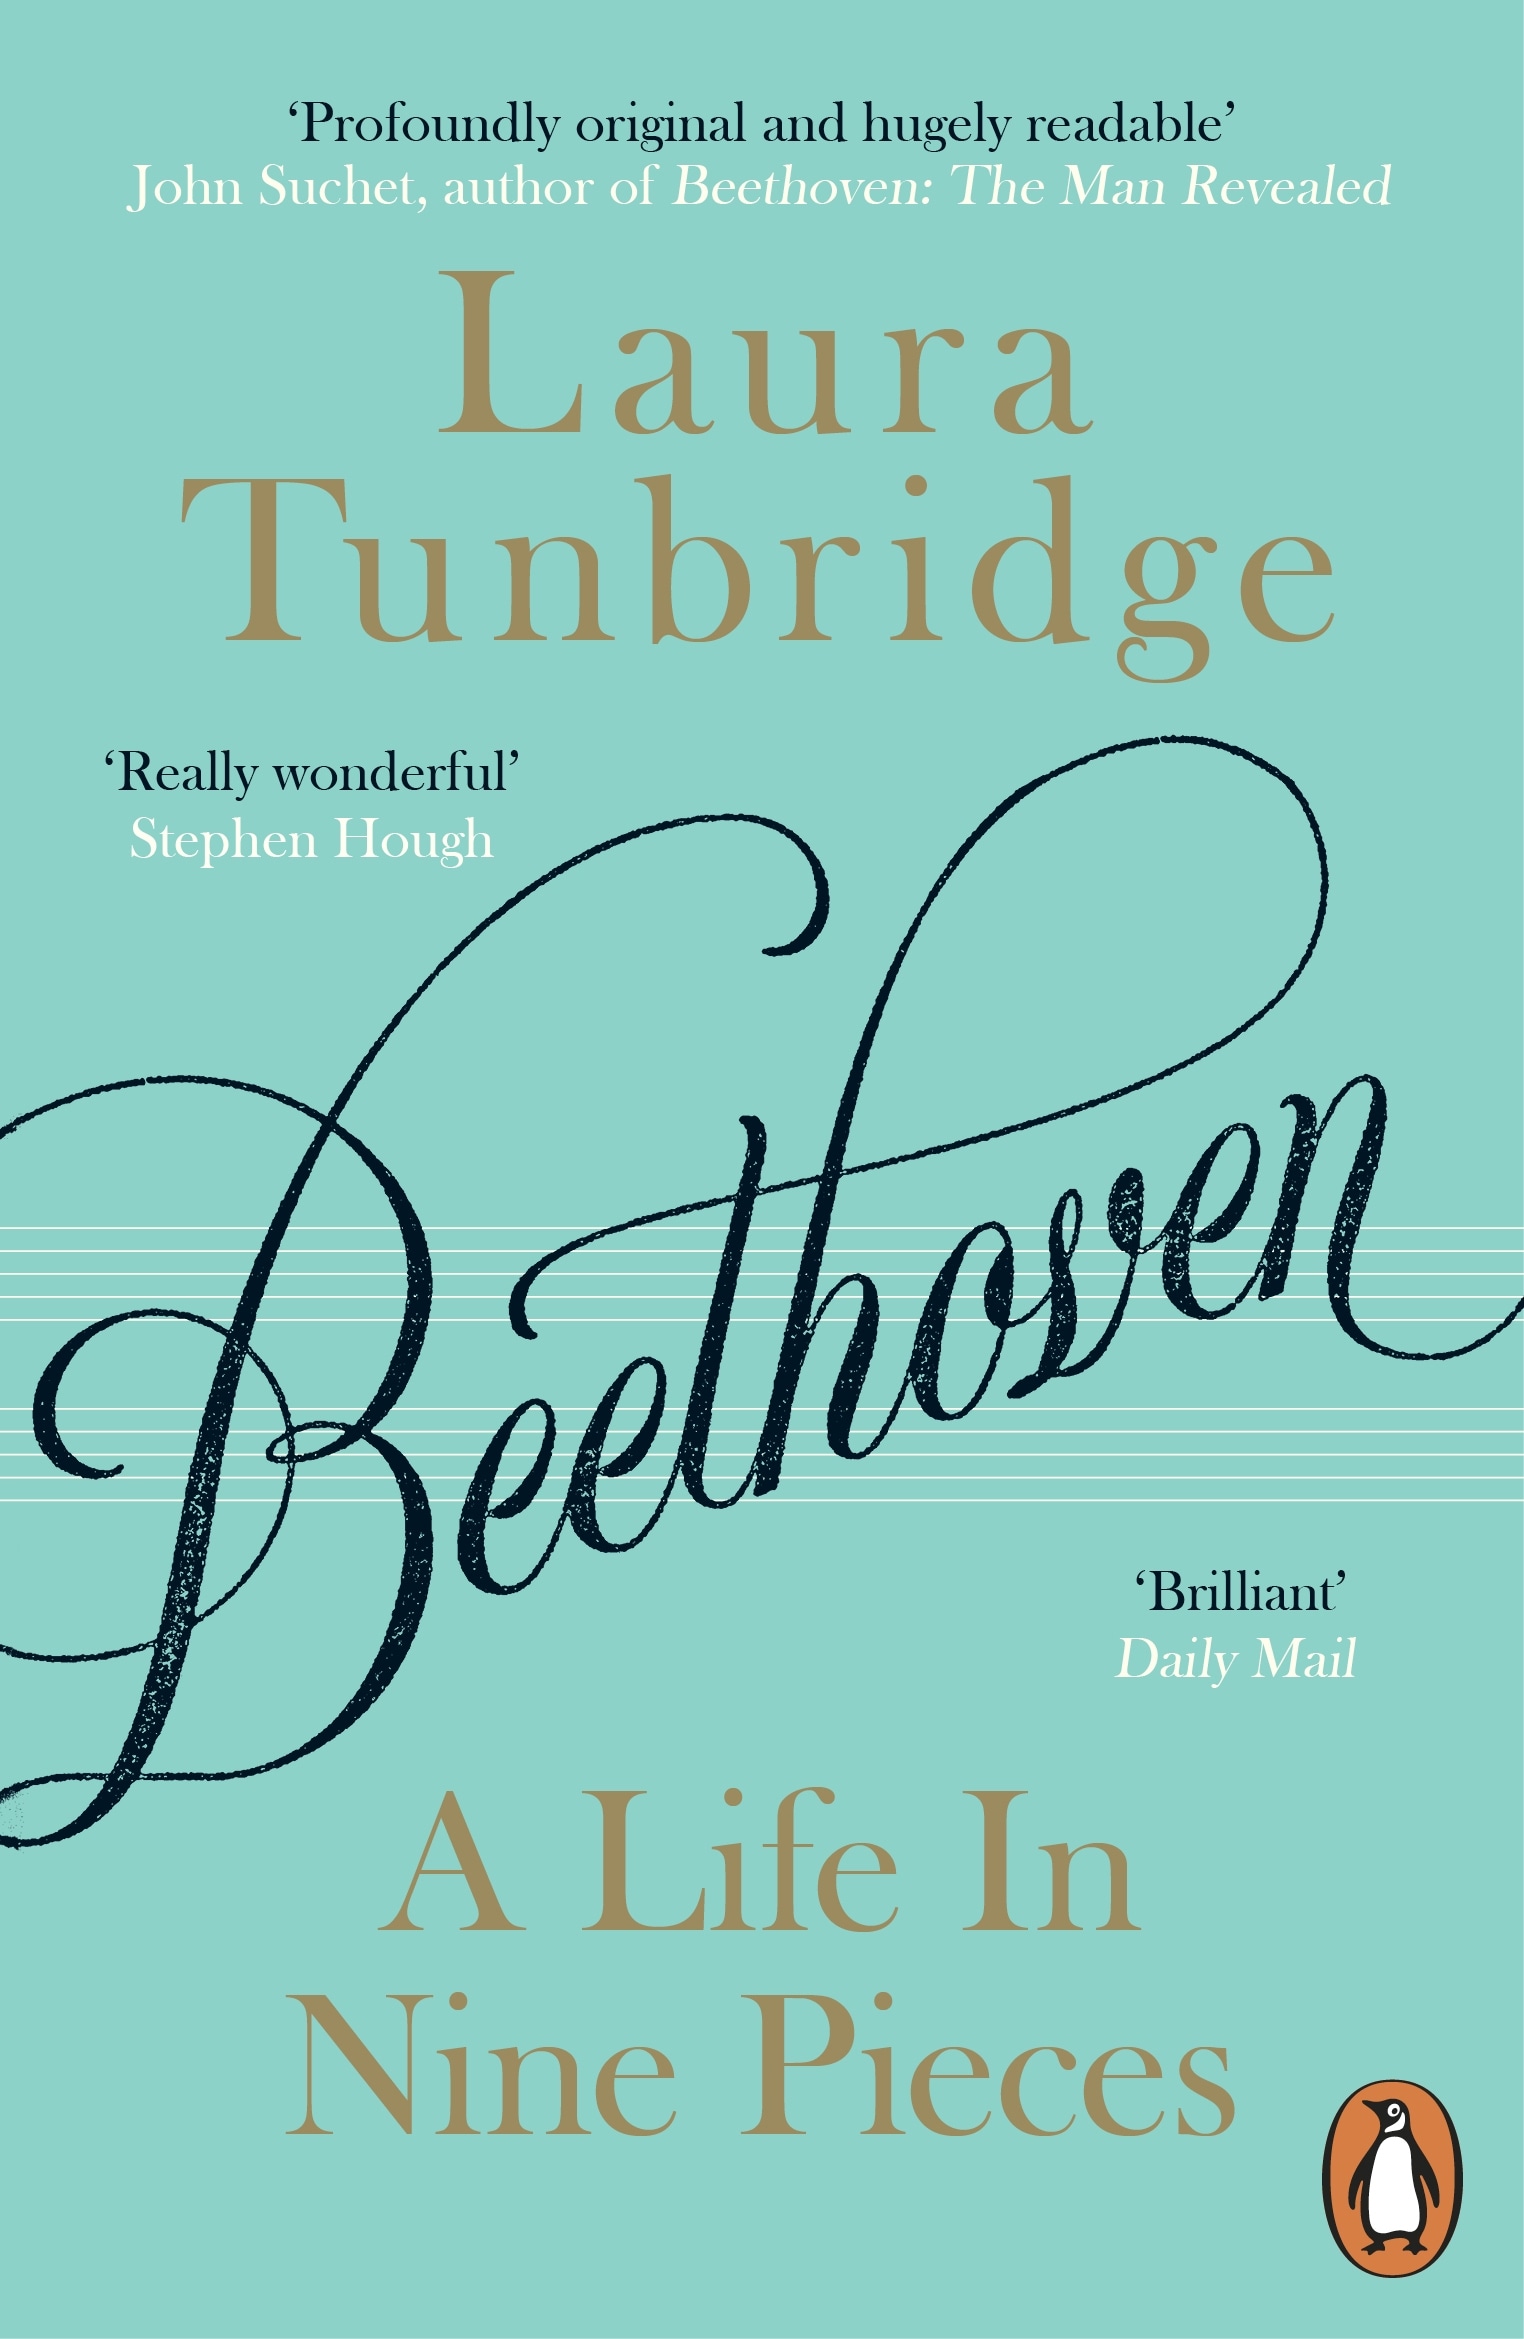 Book “Beethoven” by Laura Tunbridge — June 24, 2021